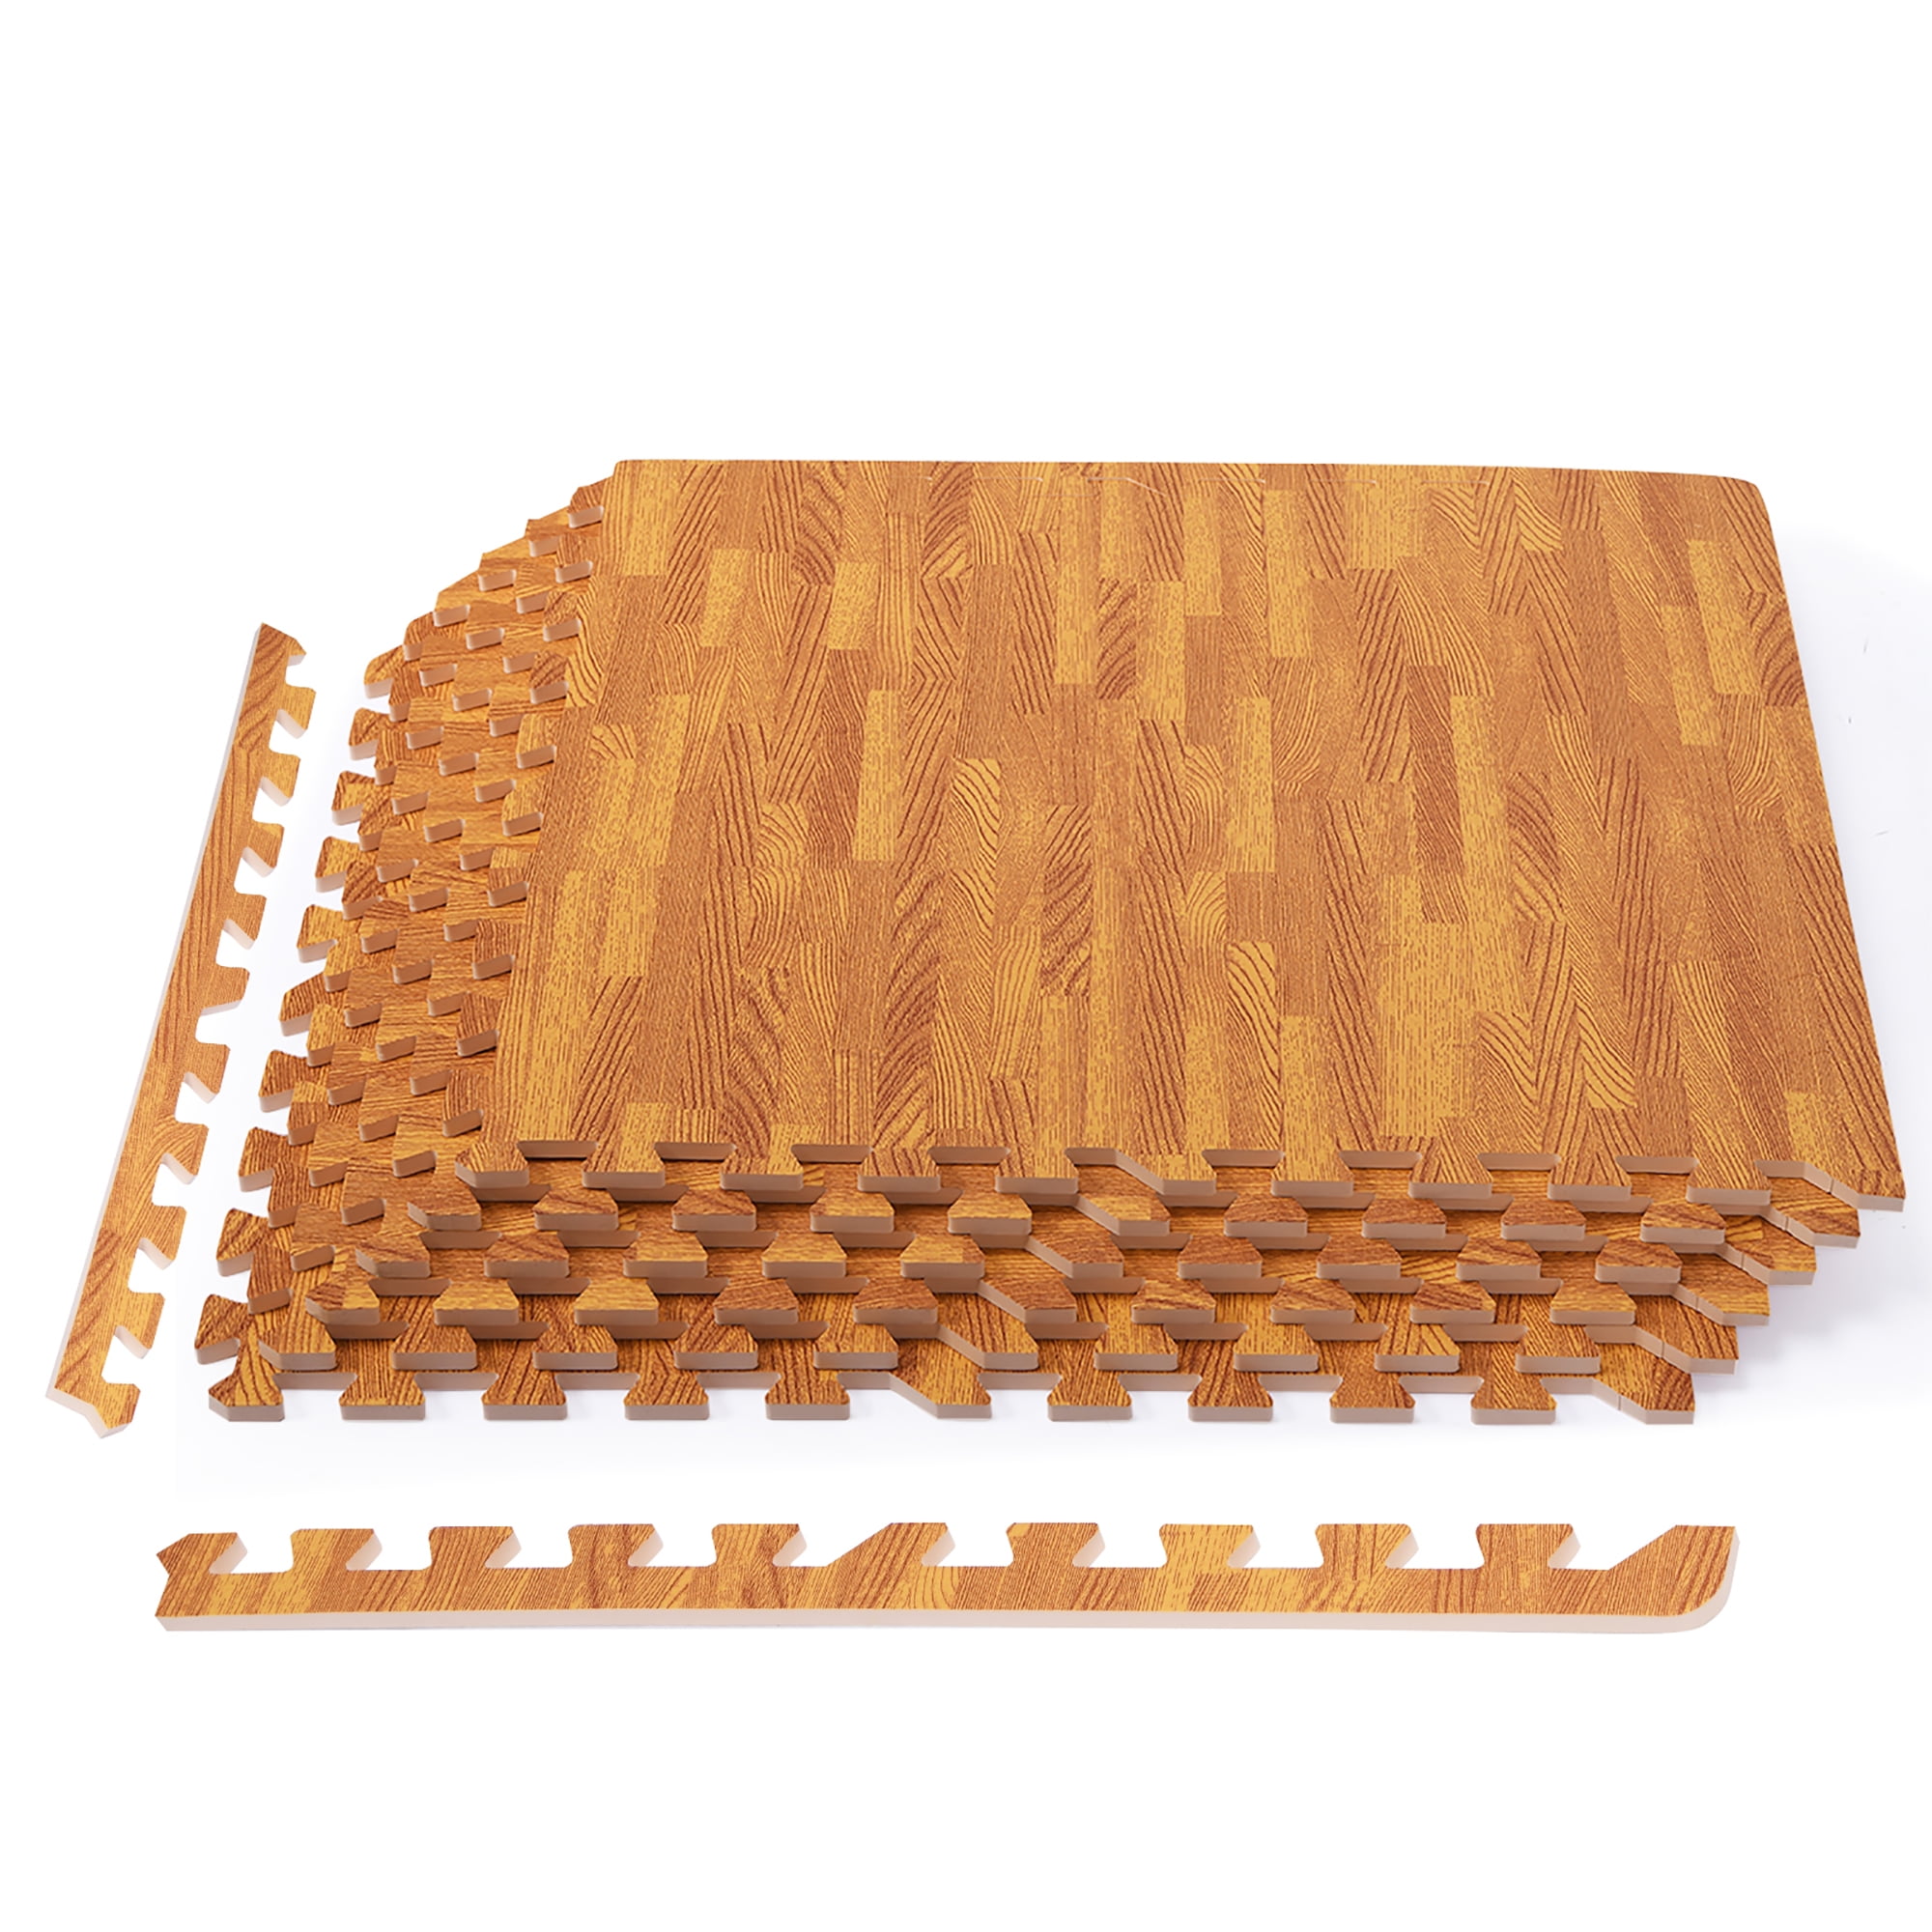 Costway 12pc Wood Grain Interlocking, Interlocking Floor Tiles Wood Effect